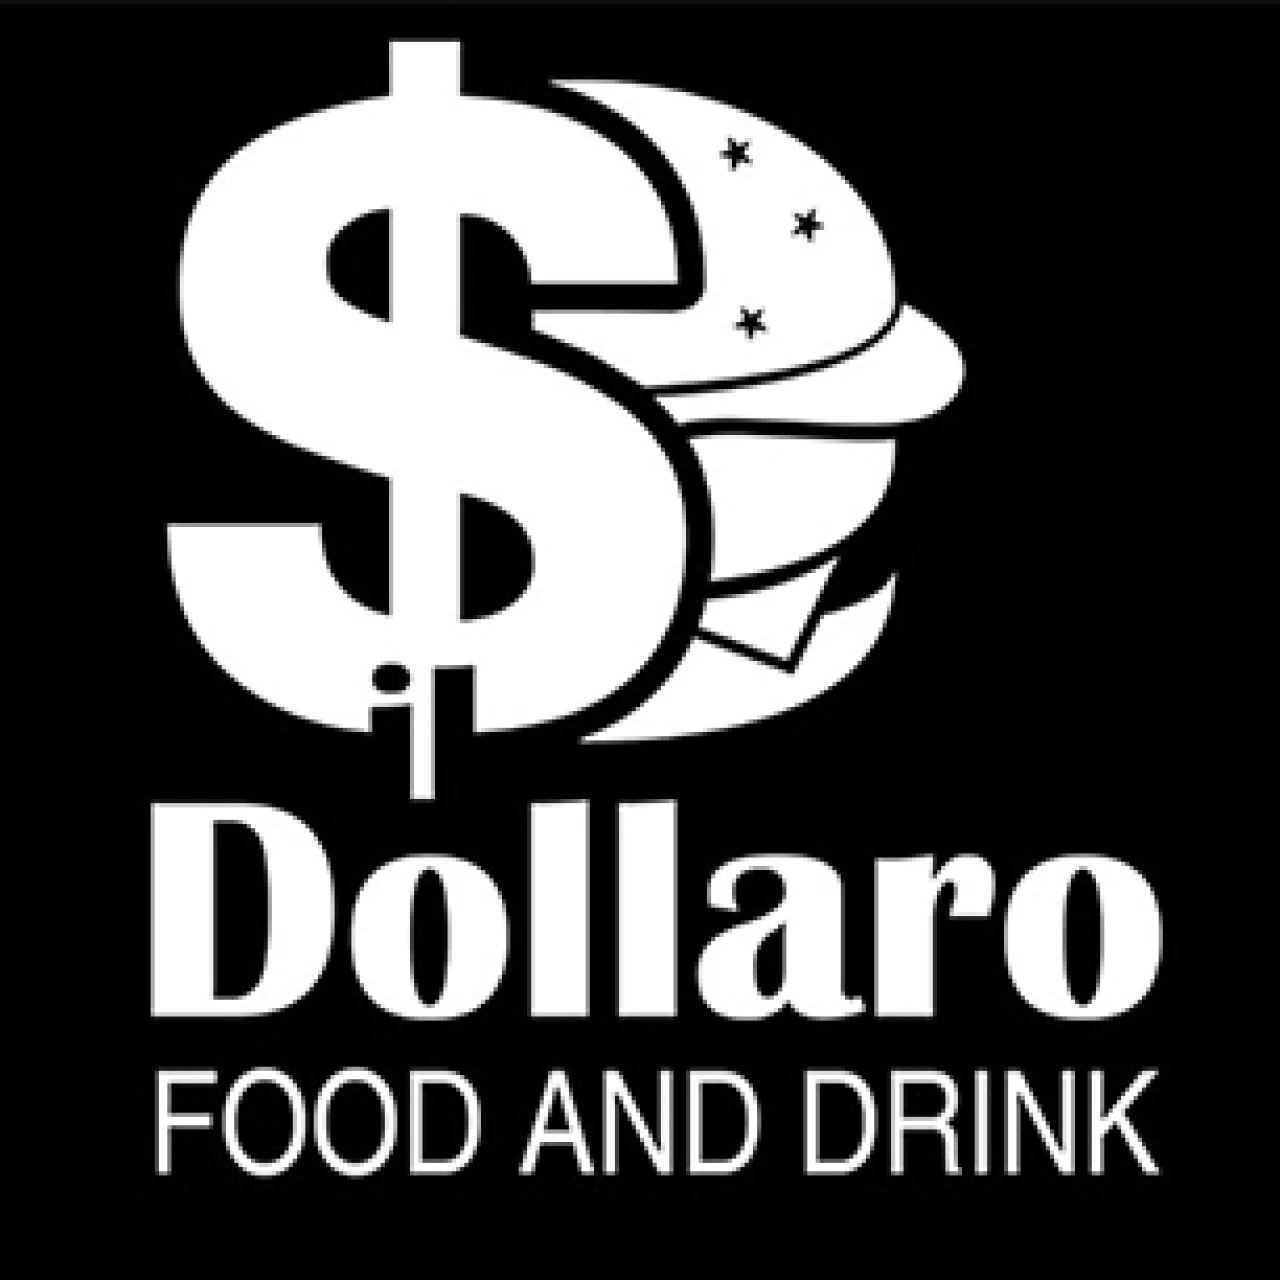 Banner Il Dollaro 306 per 306 pixel